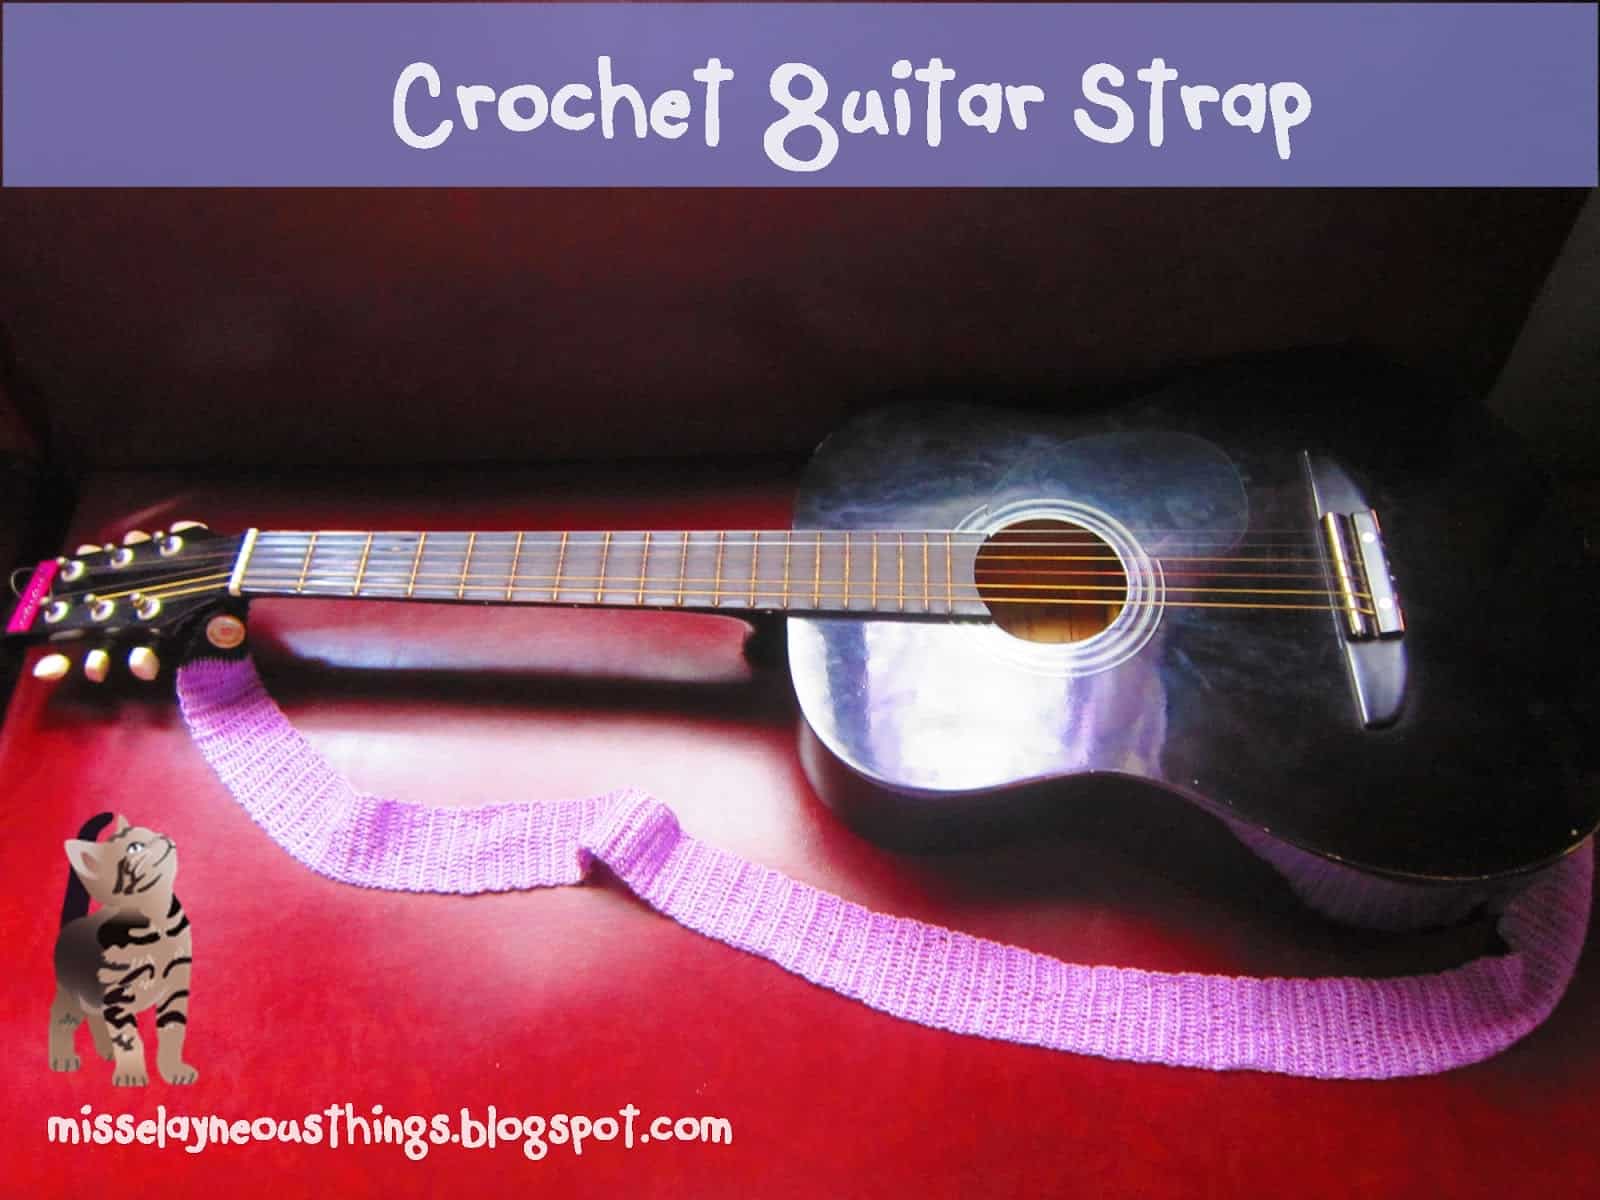 Crochet guitar strap